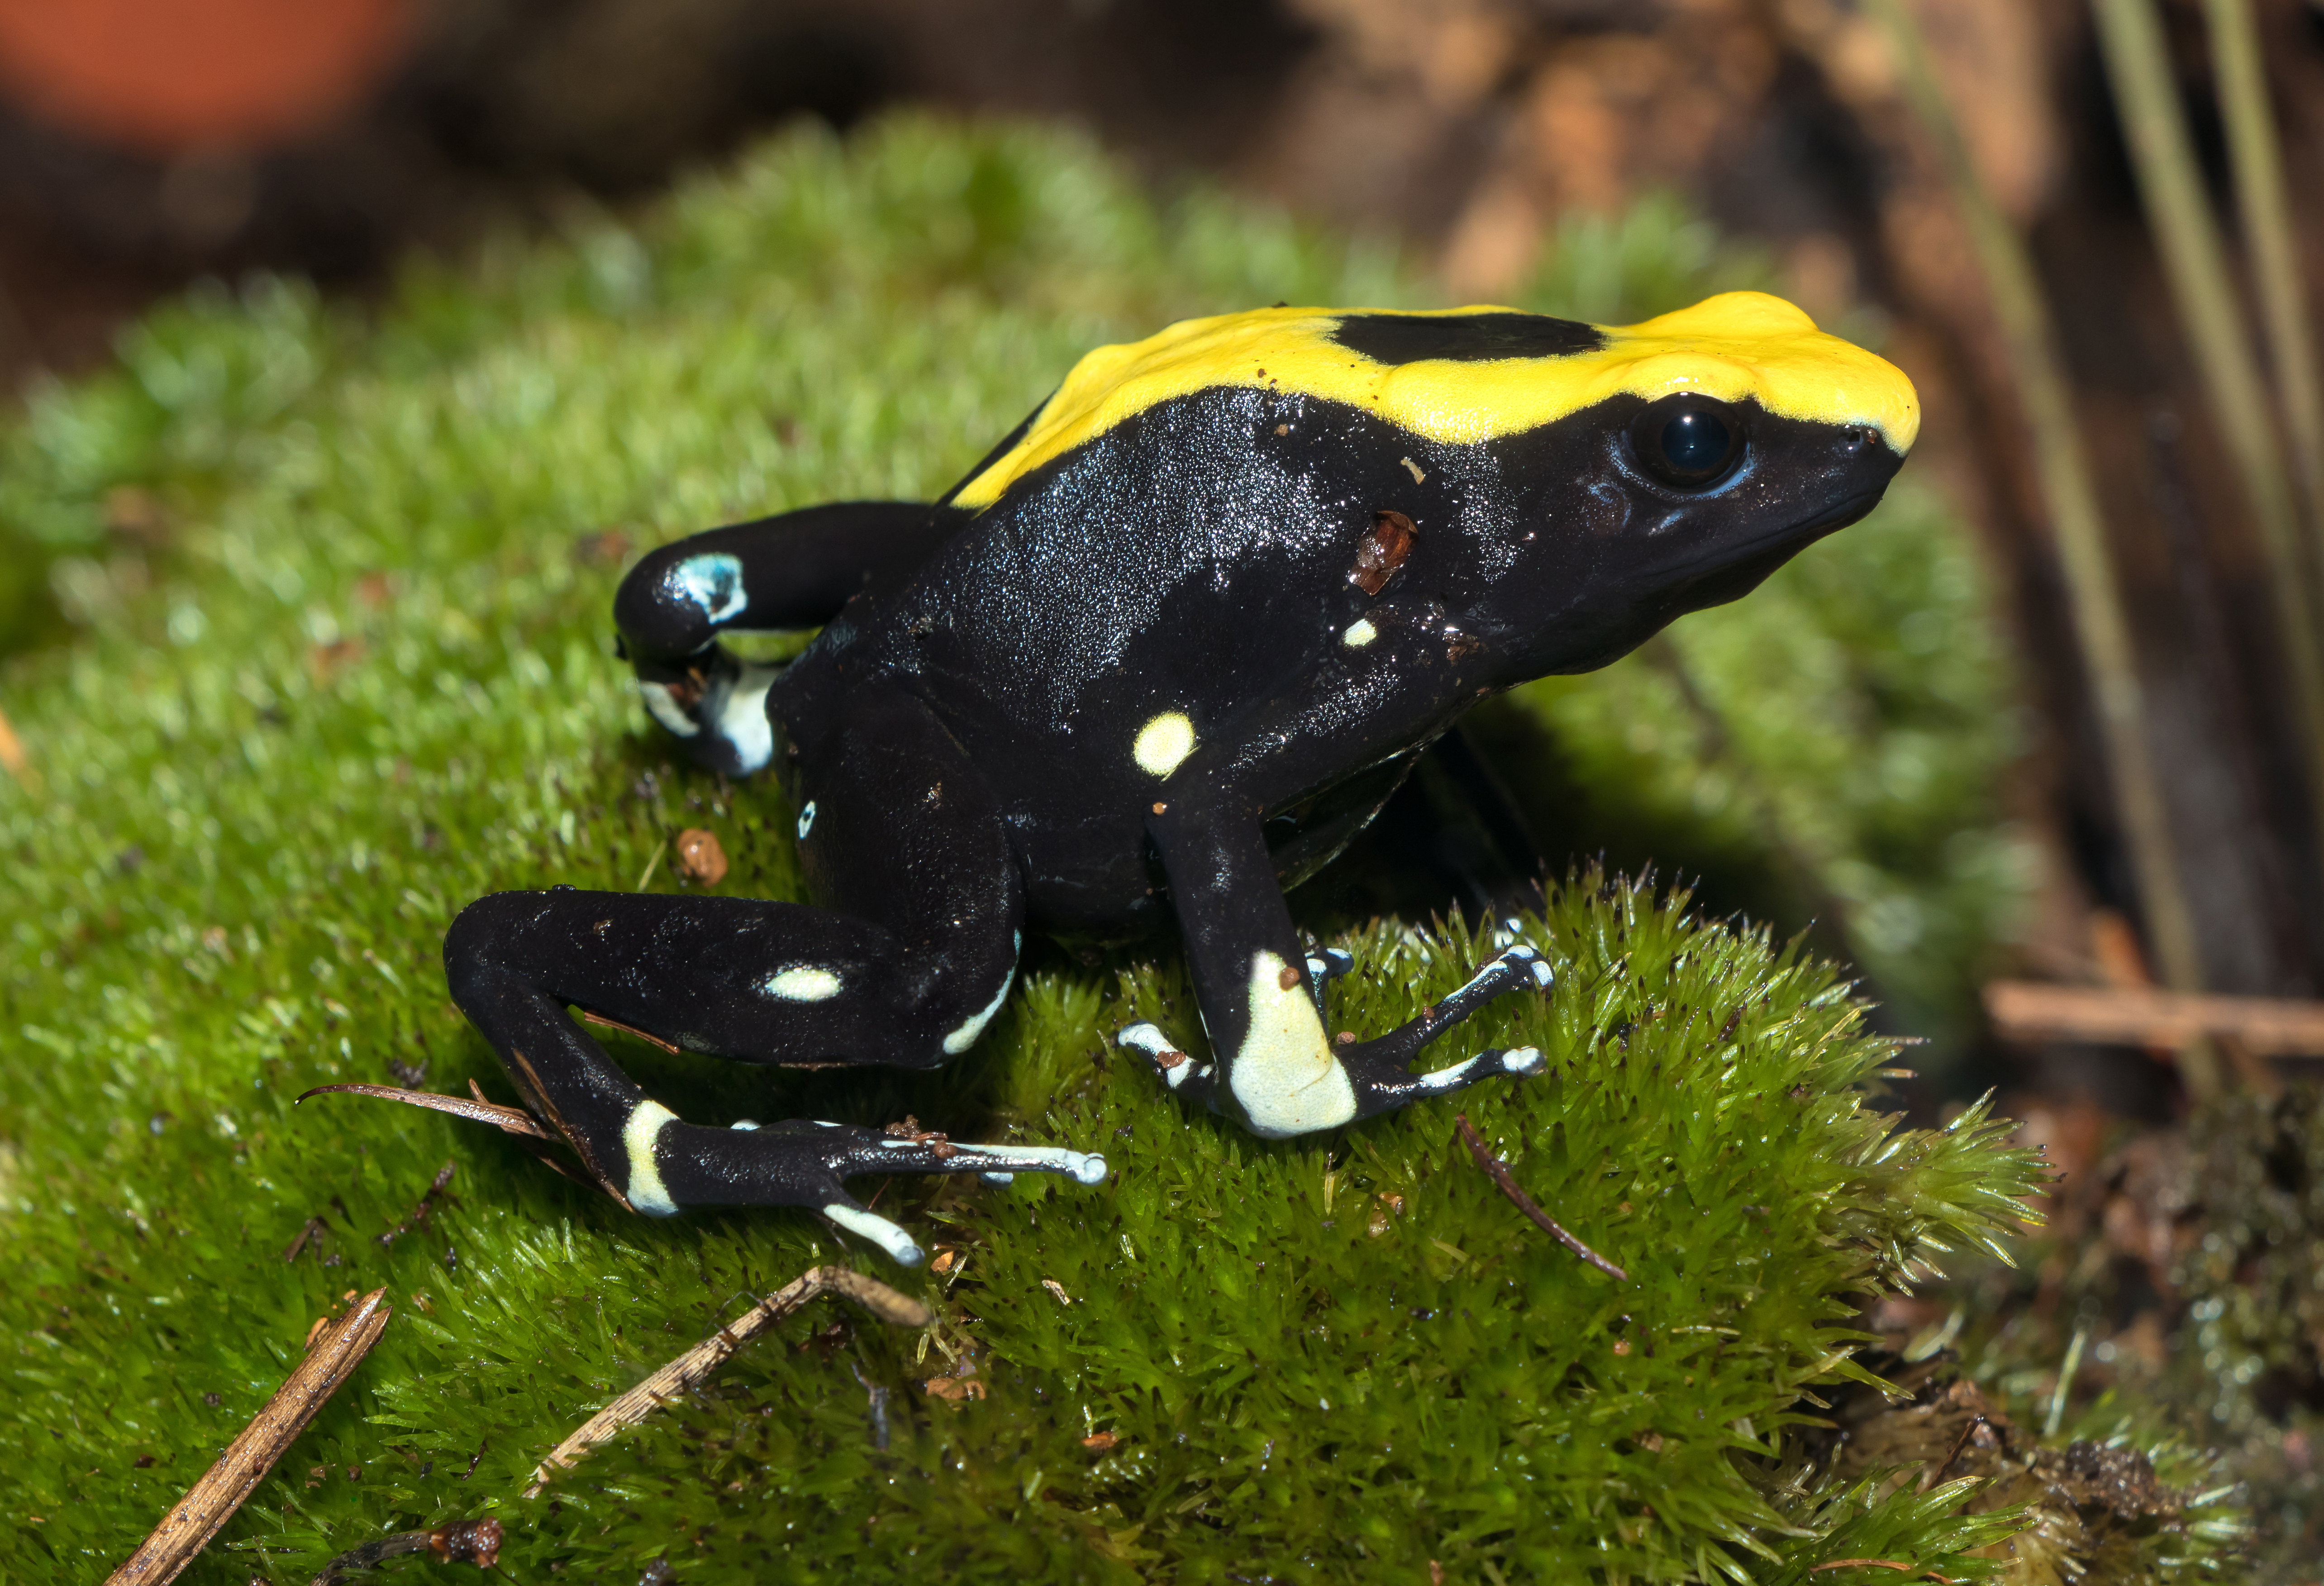 Dyeing poison dart frog - Wikipedia